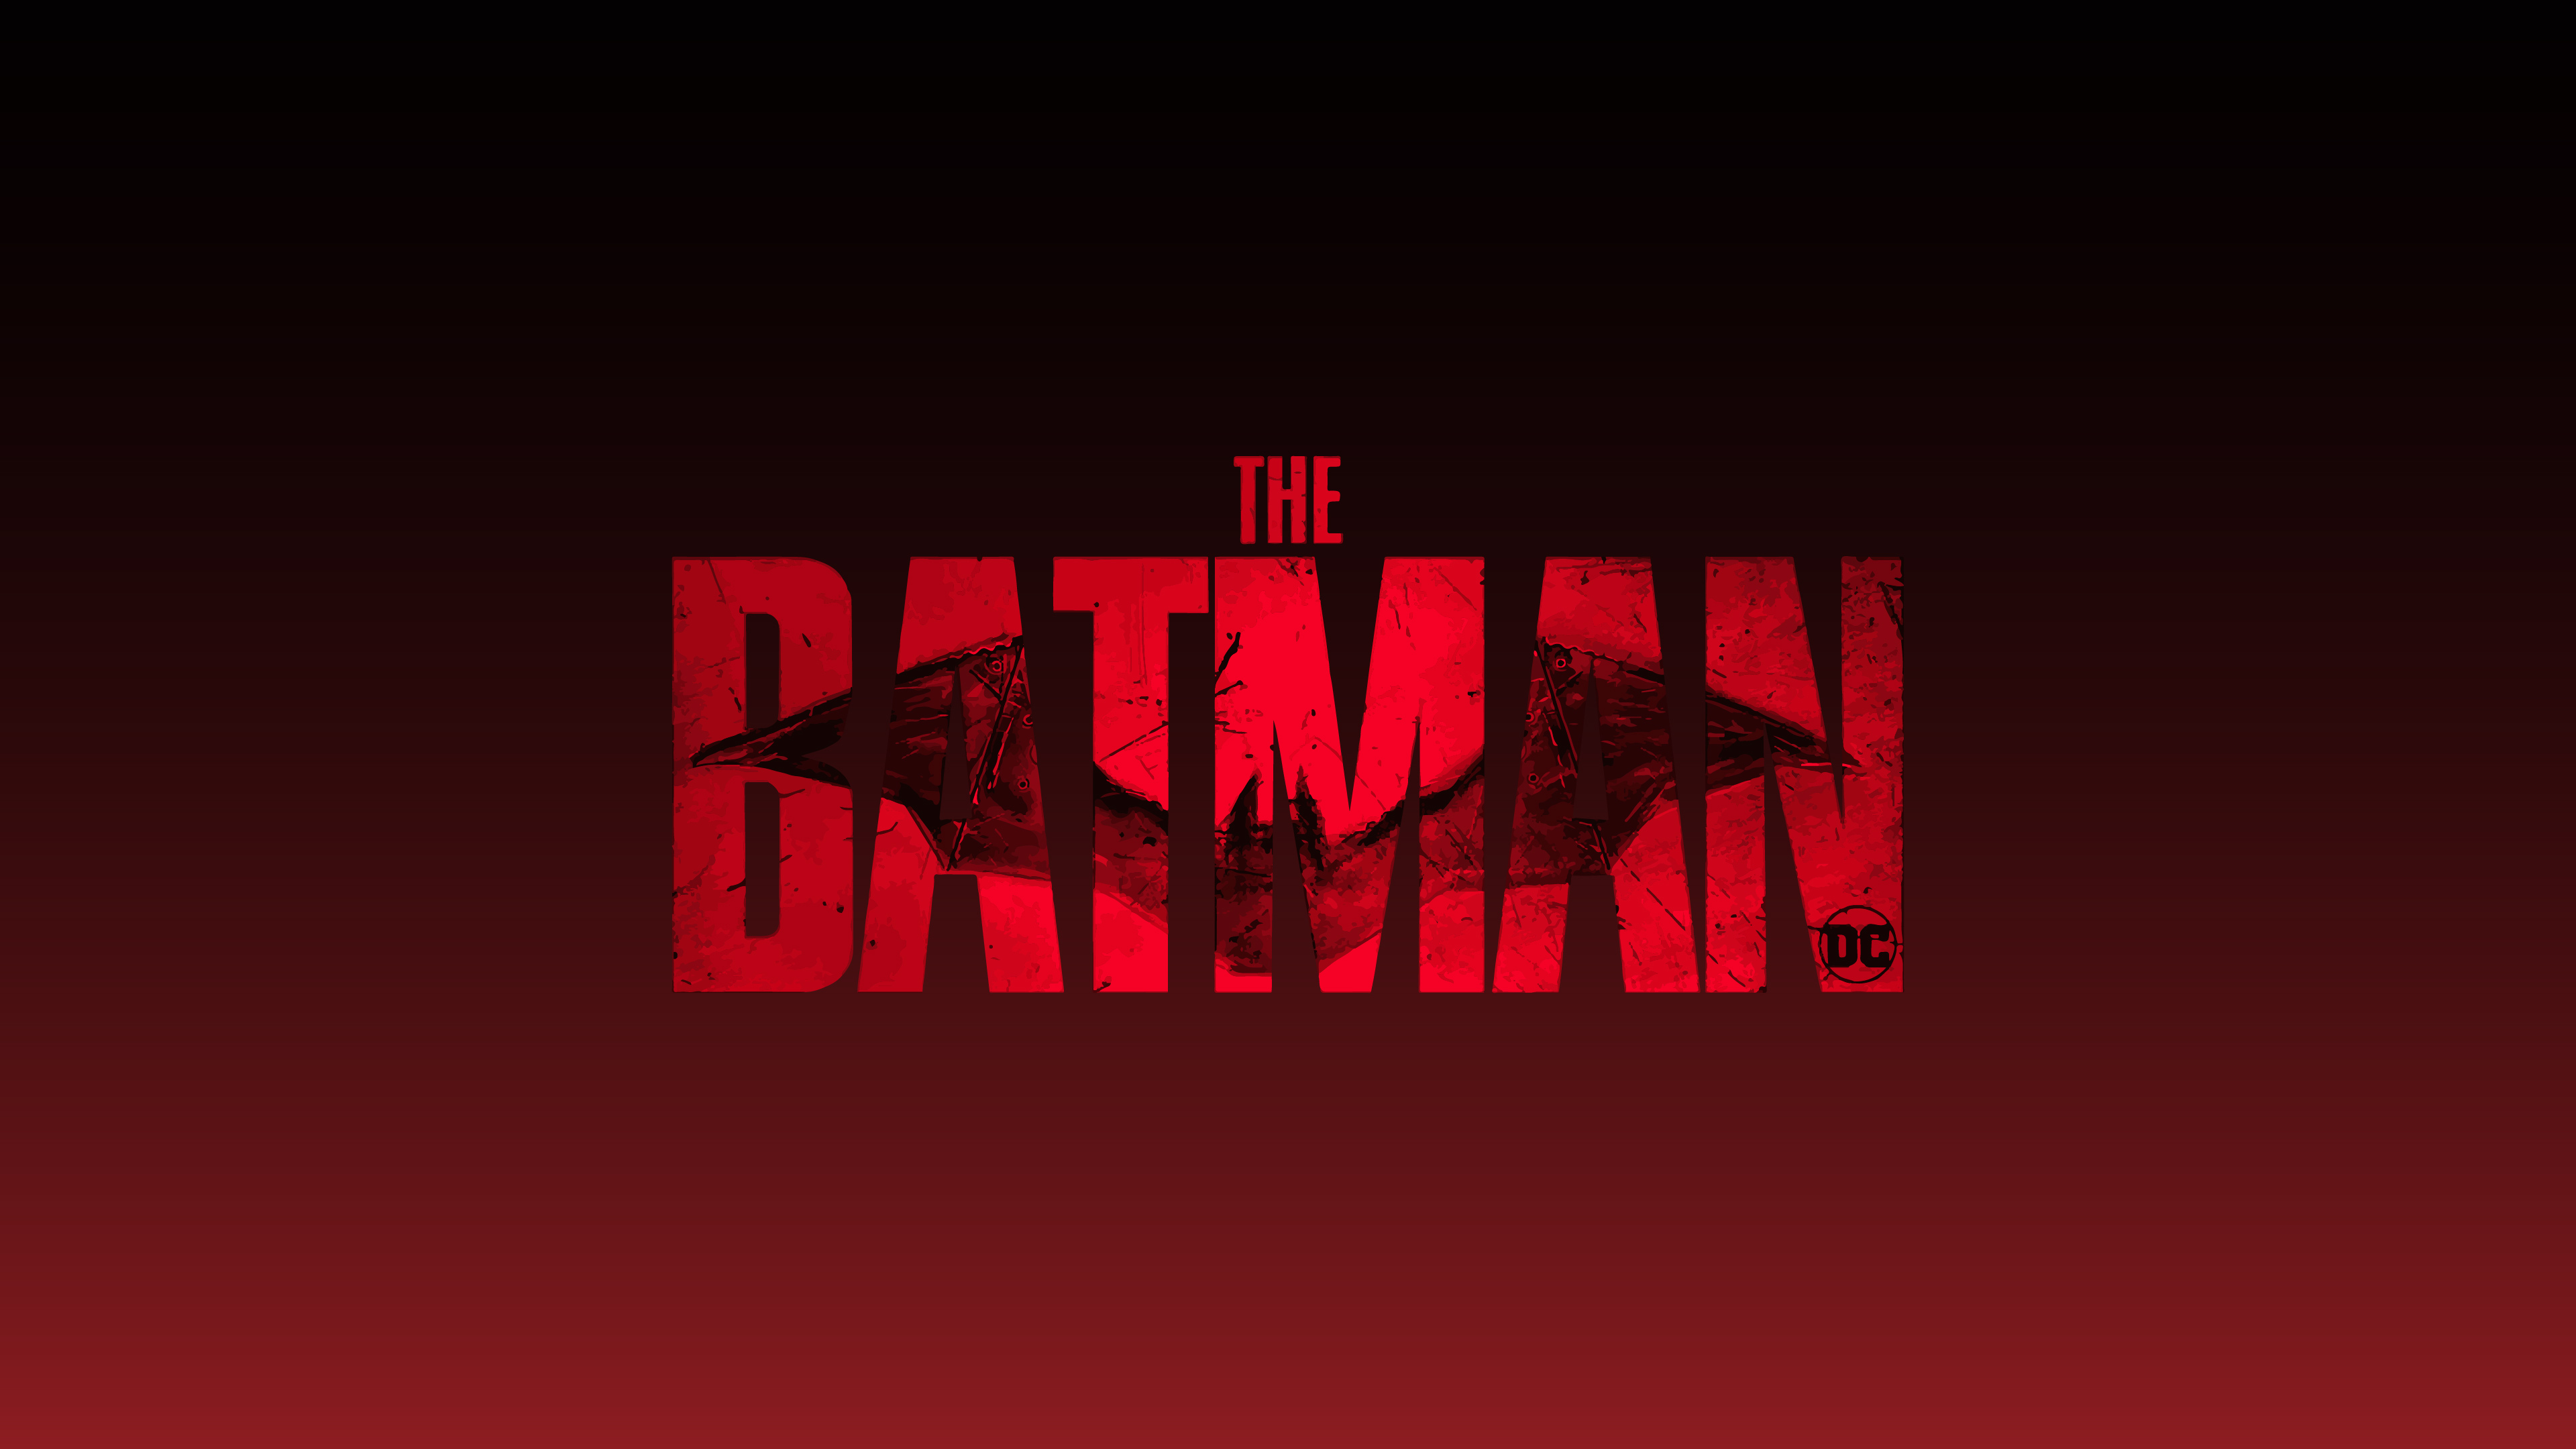 The Batman Movie Logo Wallpaper 4k Pc Desktop 820d